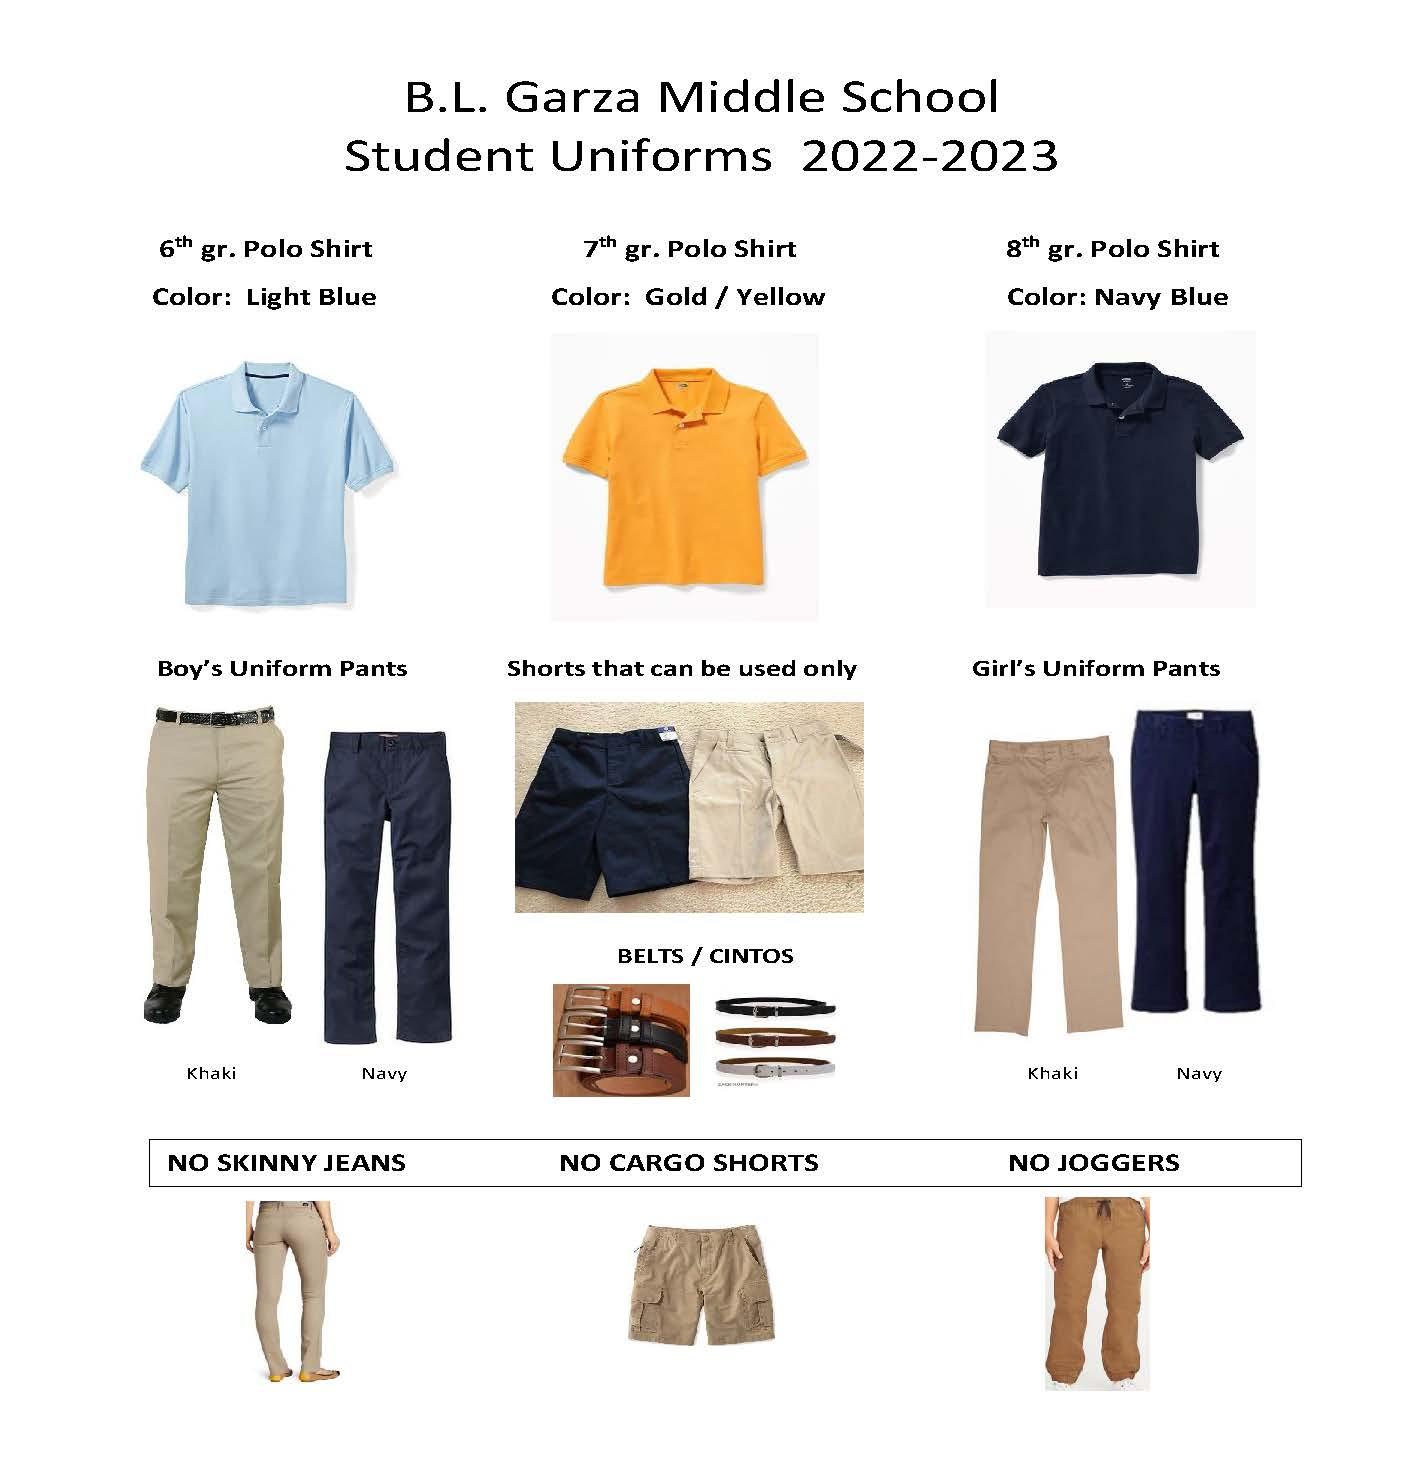 BL Garza uniforms for 2022-23